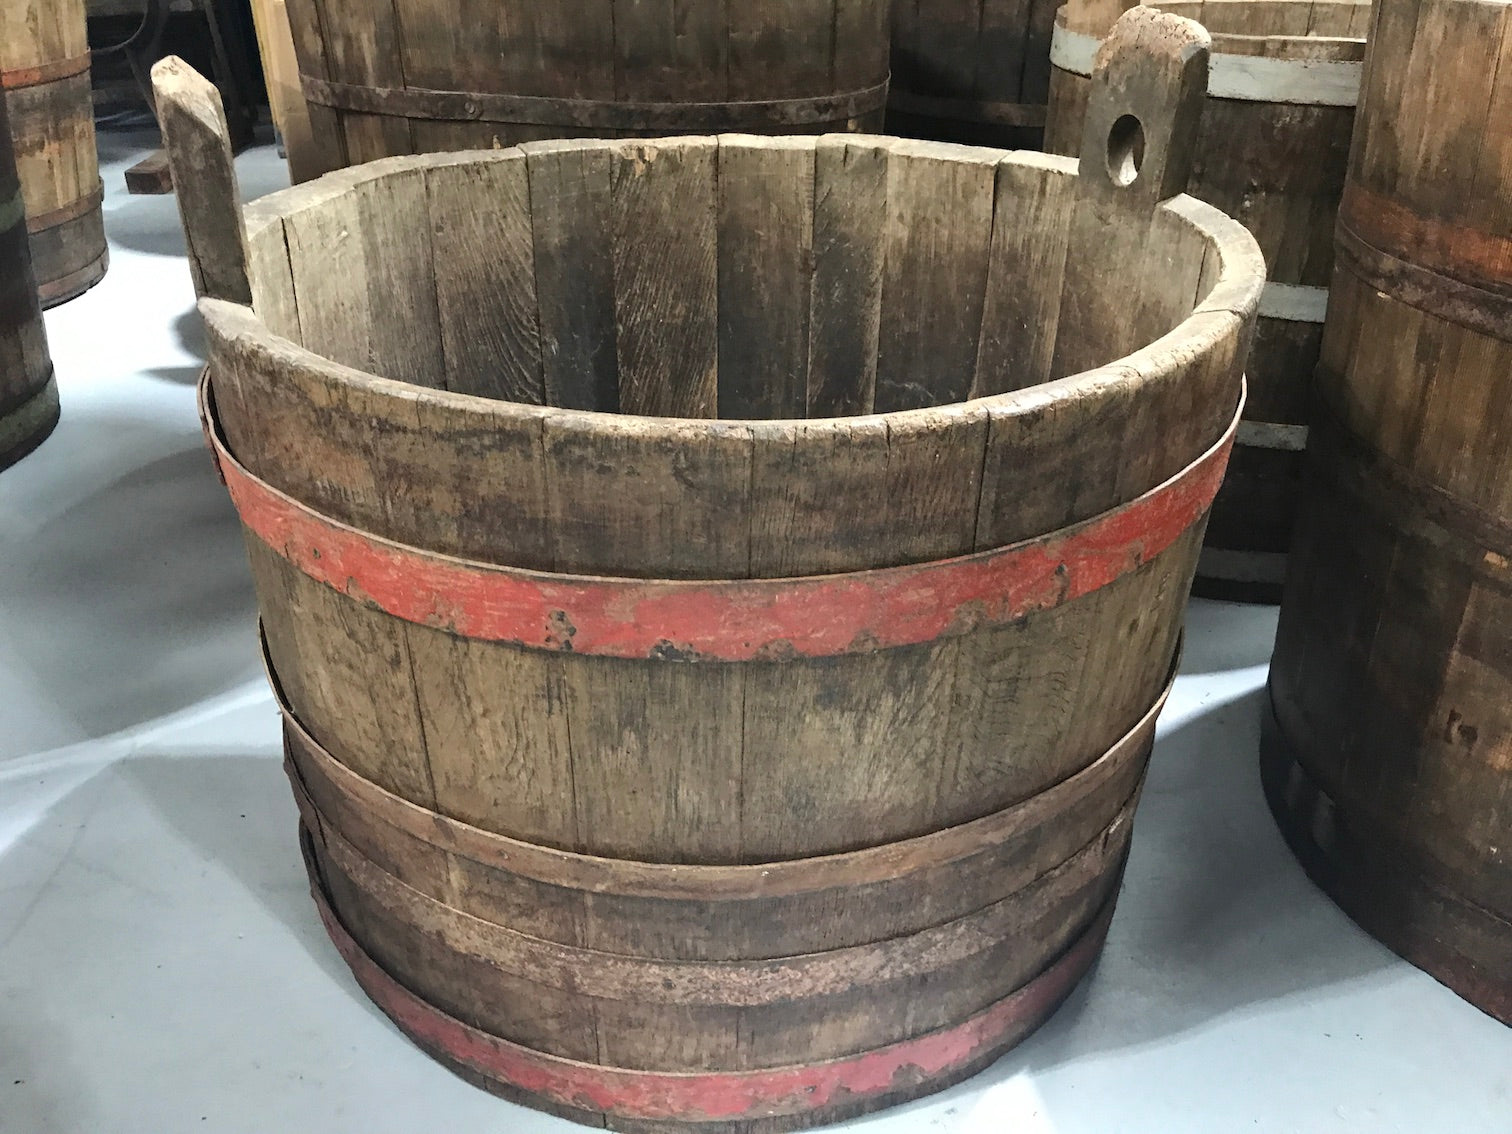 Vintage industrial French oak round wine barrel #1991/9